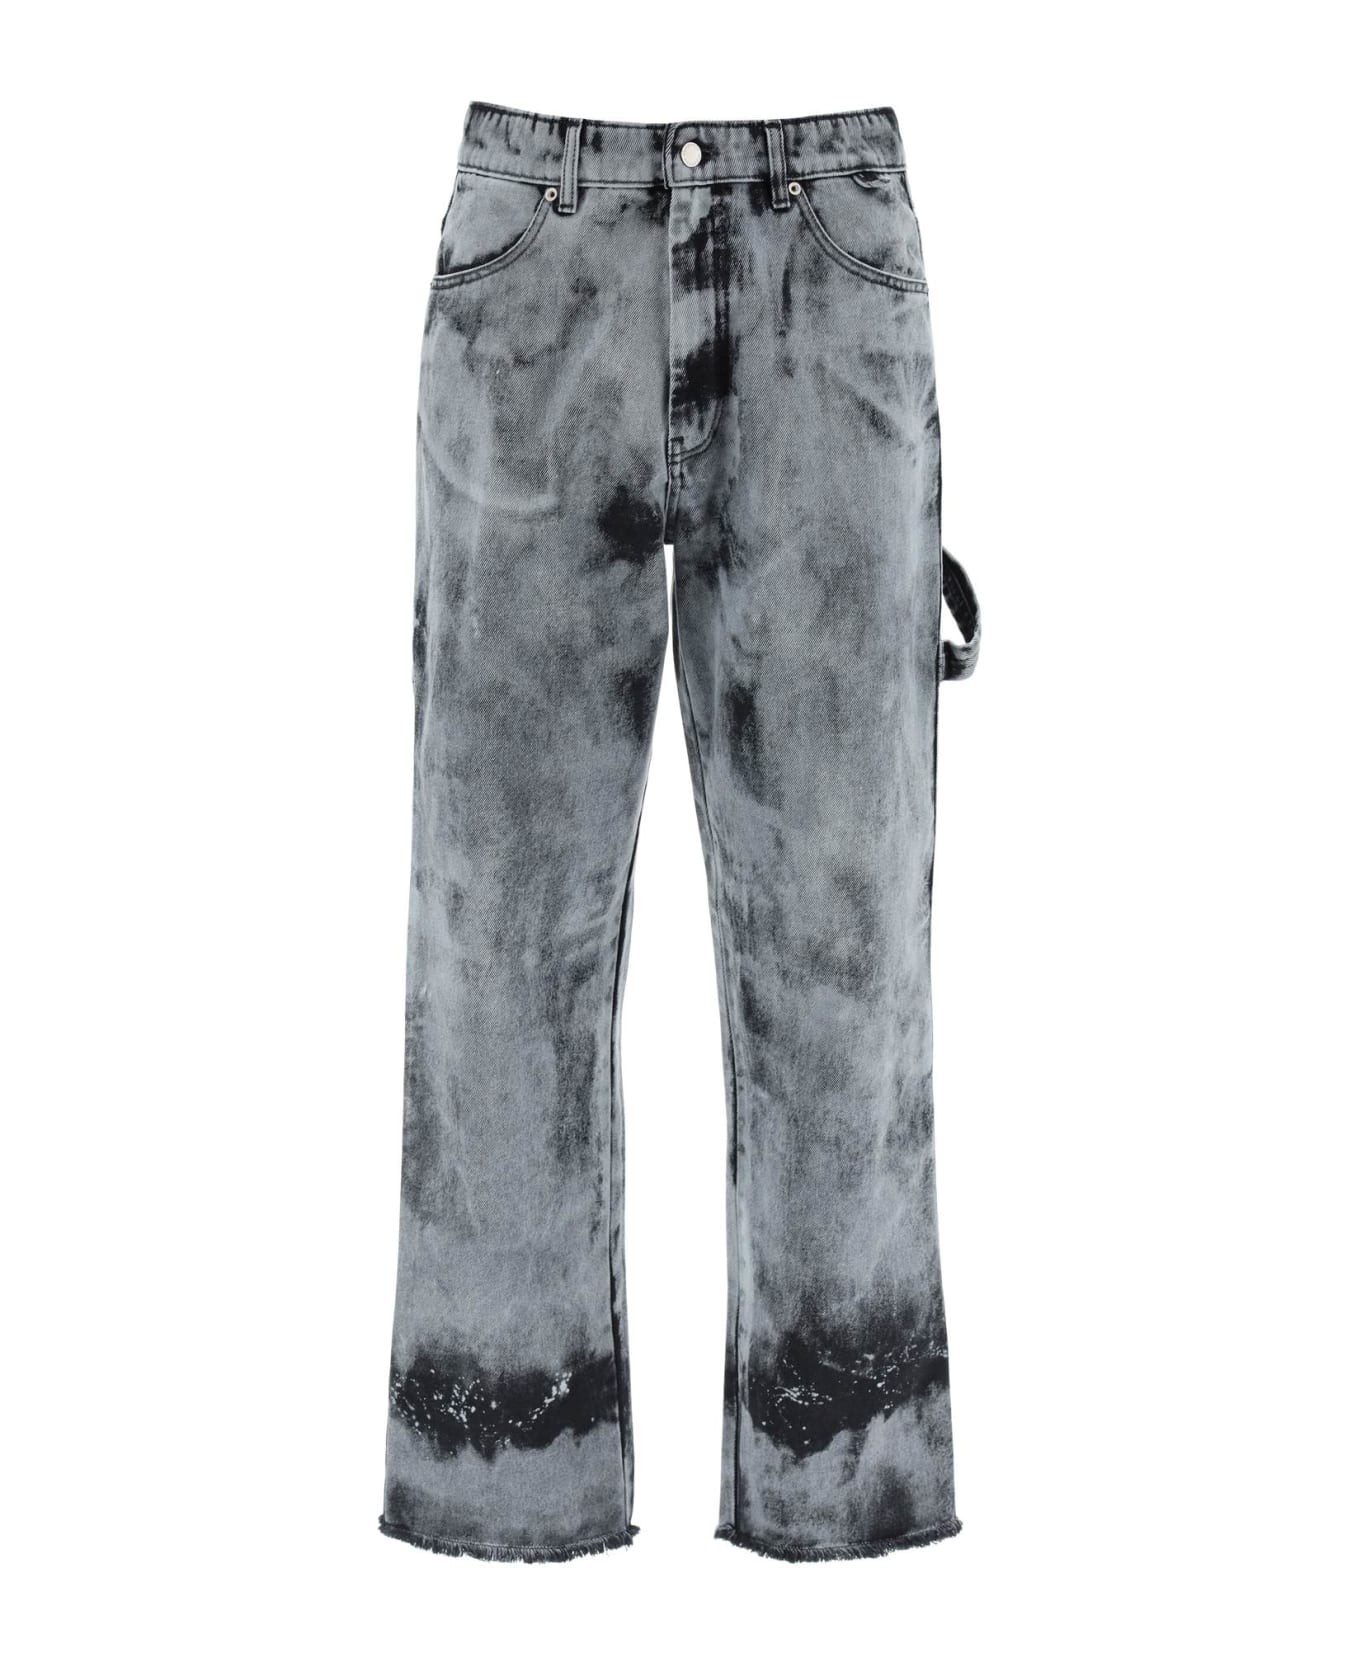 DARKPARK 'john' Workwear Jeans - BLACK GREY (Grey) デニム